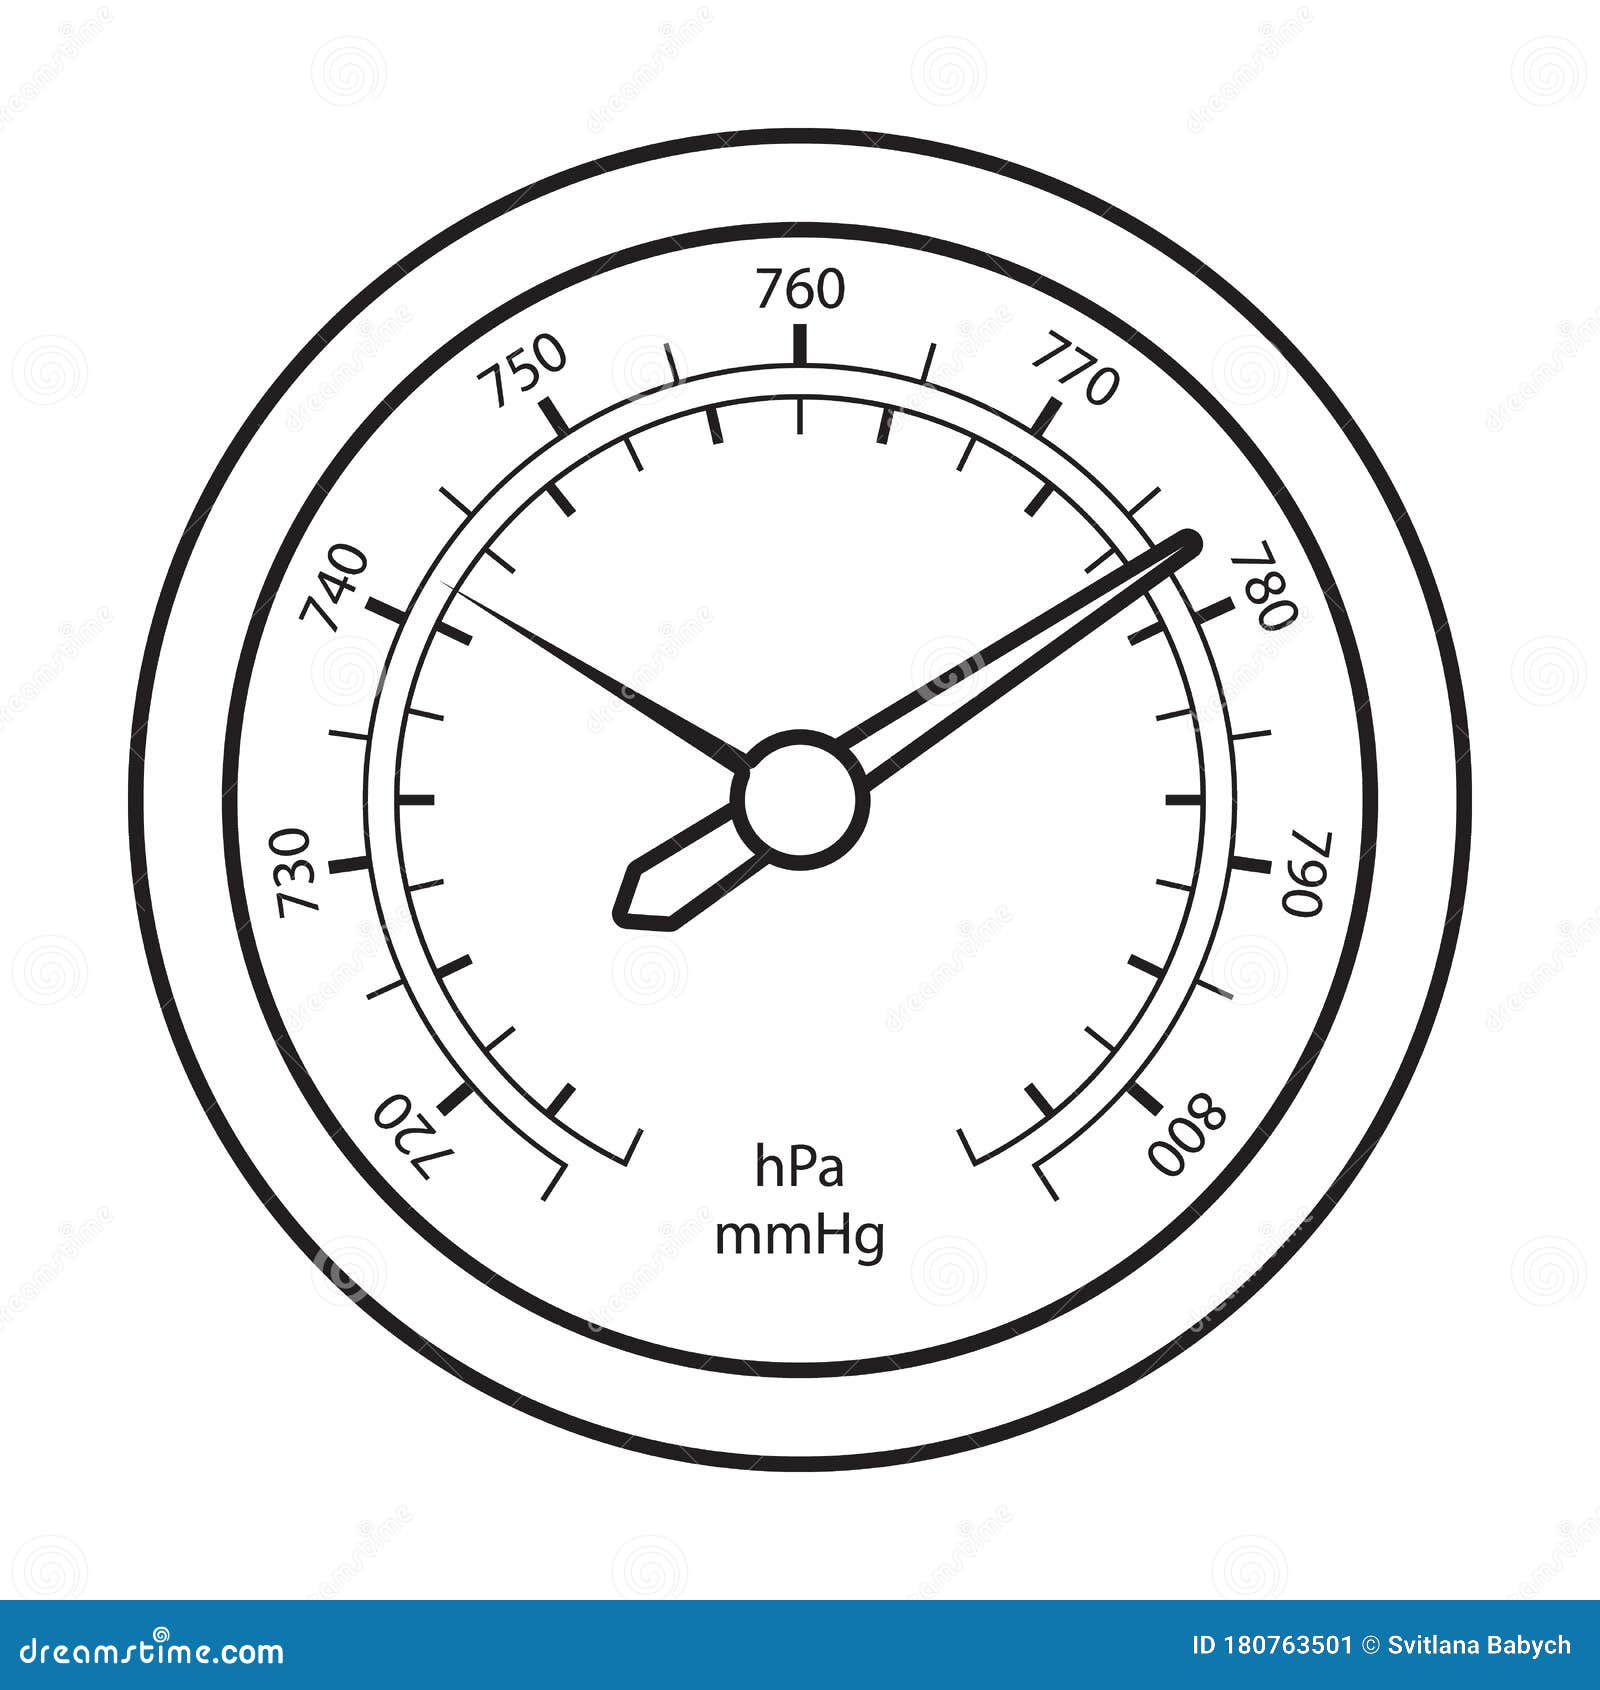 Altimeter | Barometric Pressure, Altitude Measurement & Aviation |  Britannica